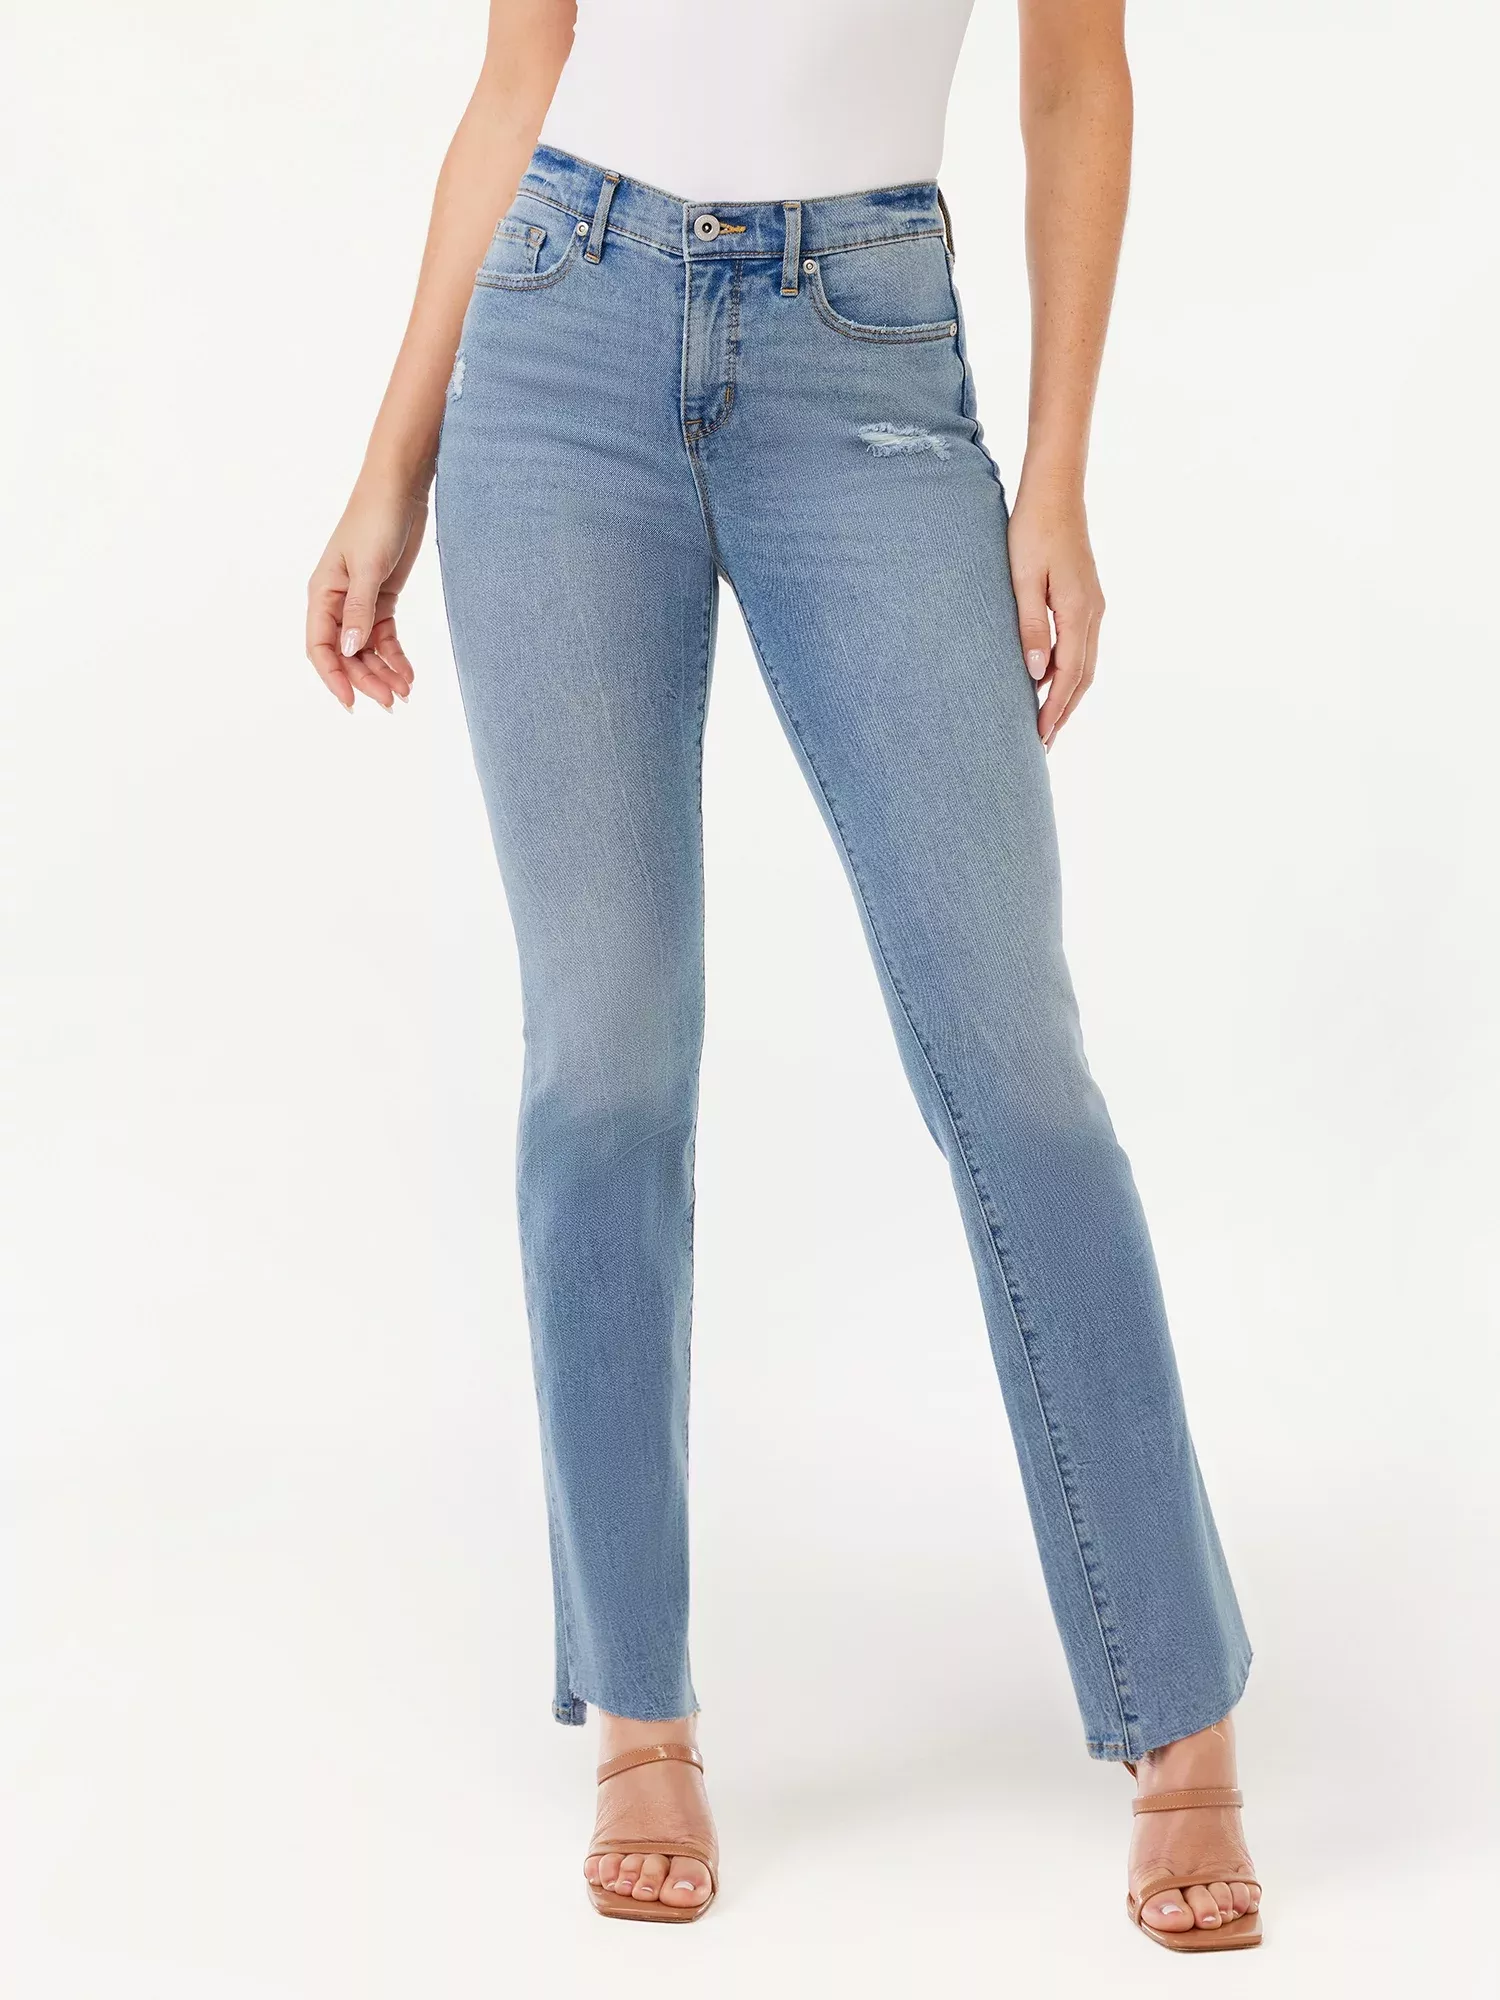 Sofia Jeans Womens Size 16 Adora Super Hi Rise Curvy Girlfriend Distressed  NEW